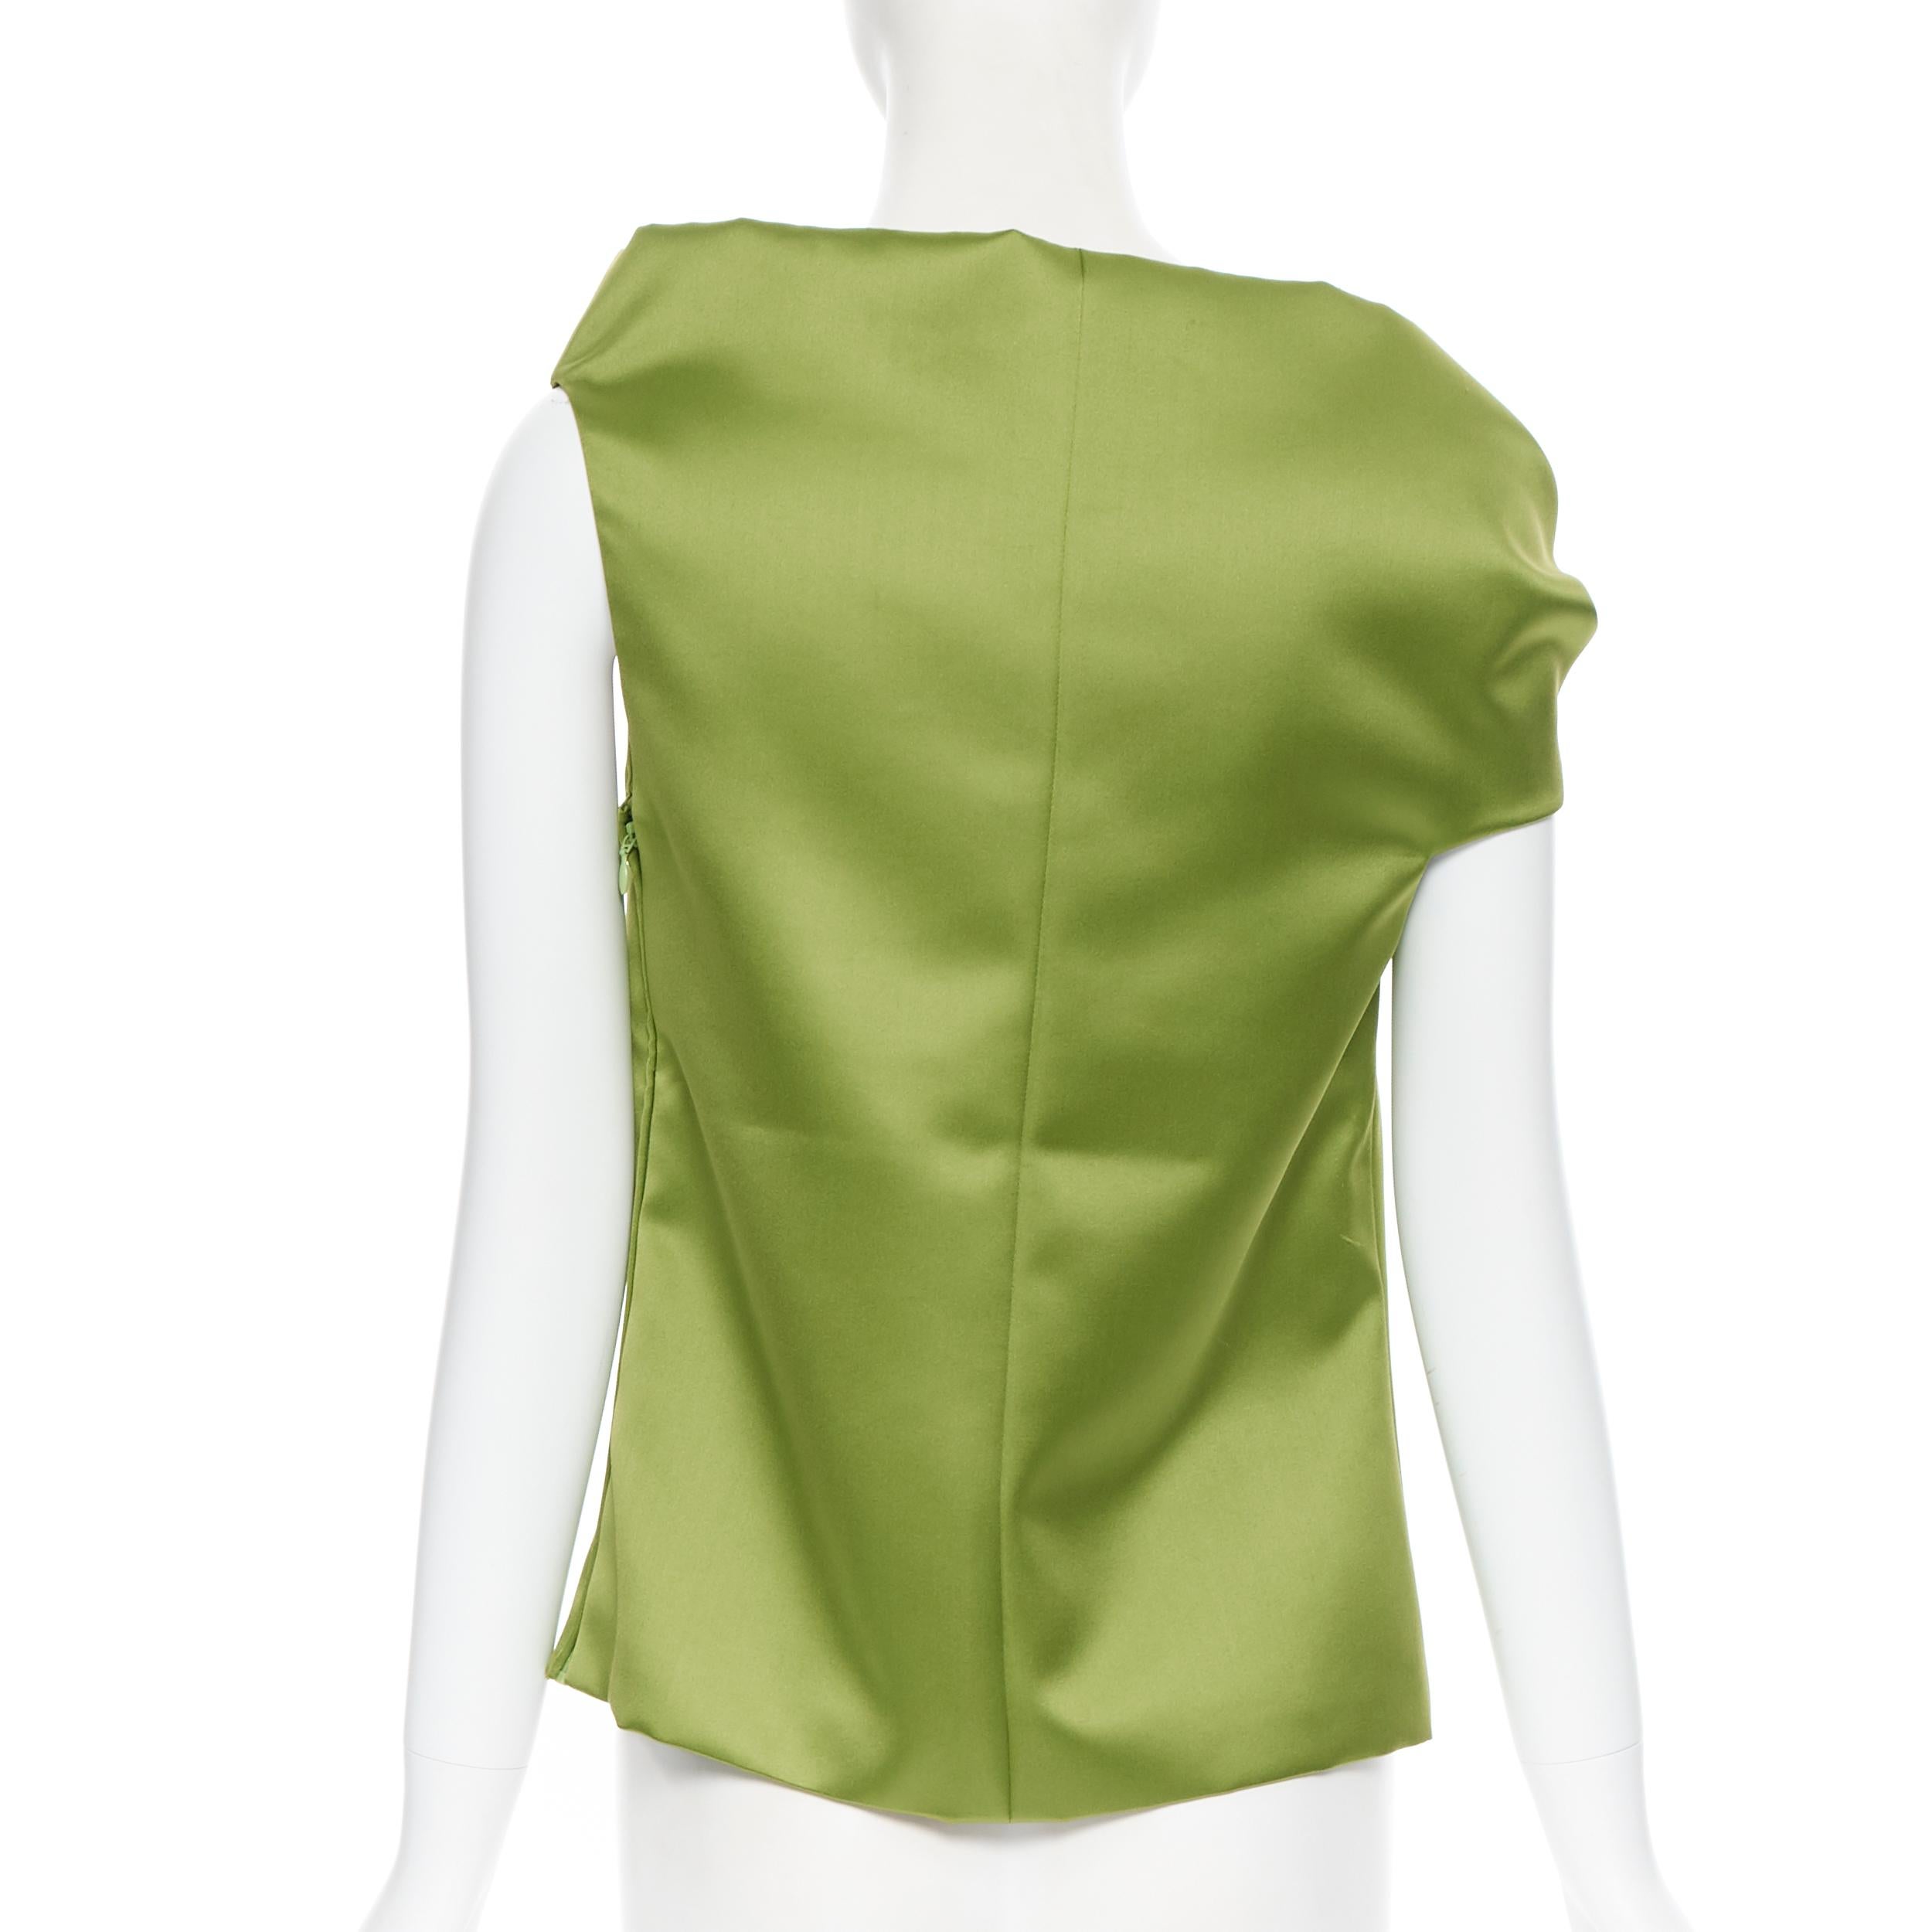 Green BALENCIAGA 2016 rich emerald green gathered asymmetric off shoulder top FR34 XS